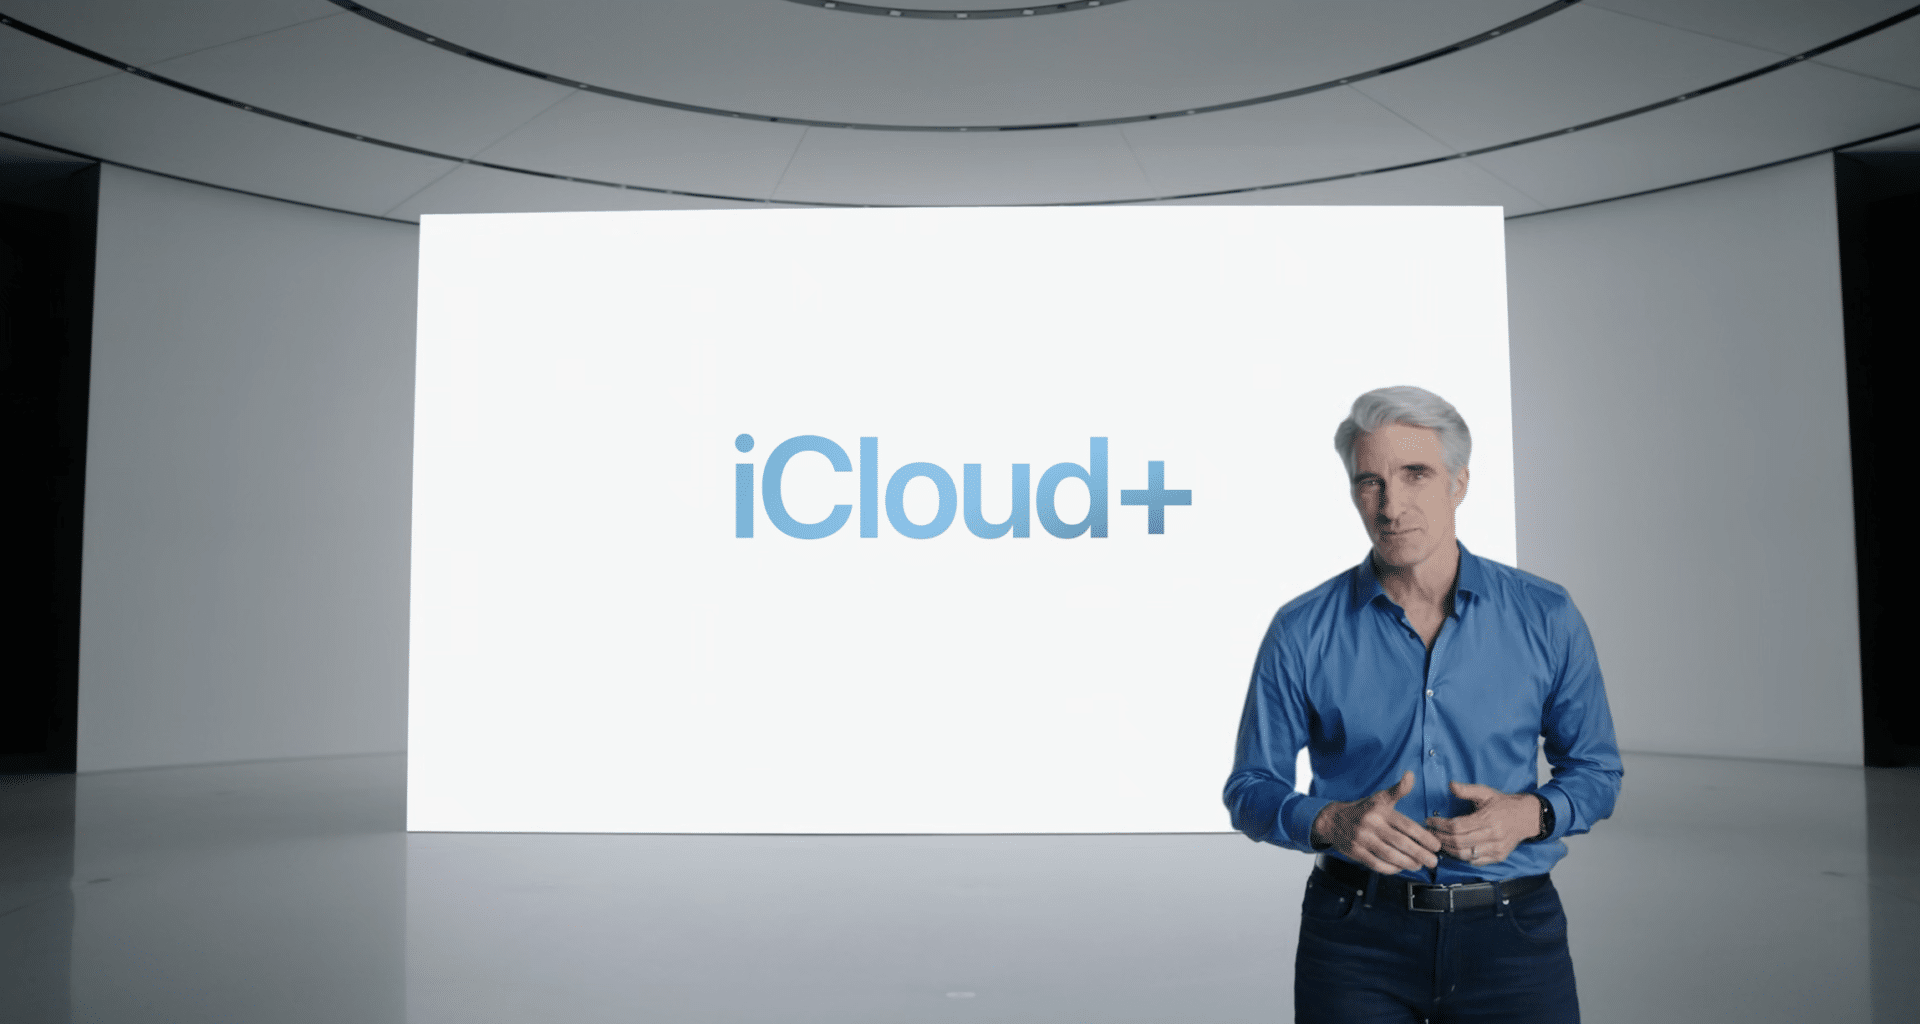 Craig apresentando o iCloud+